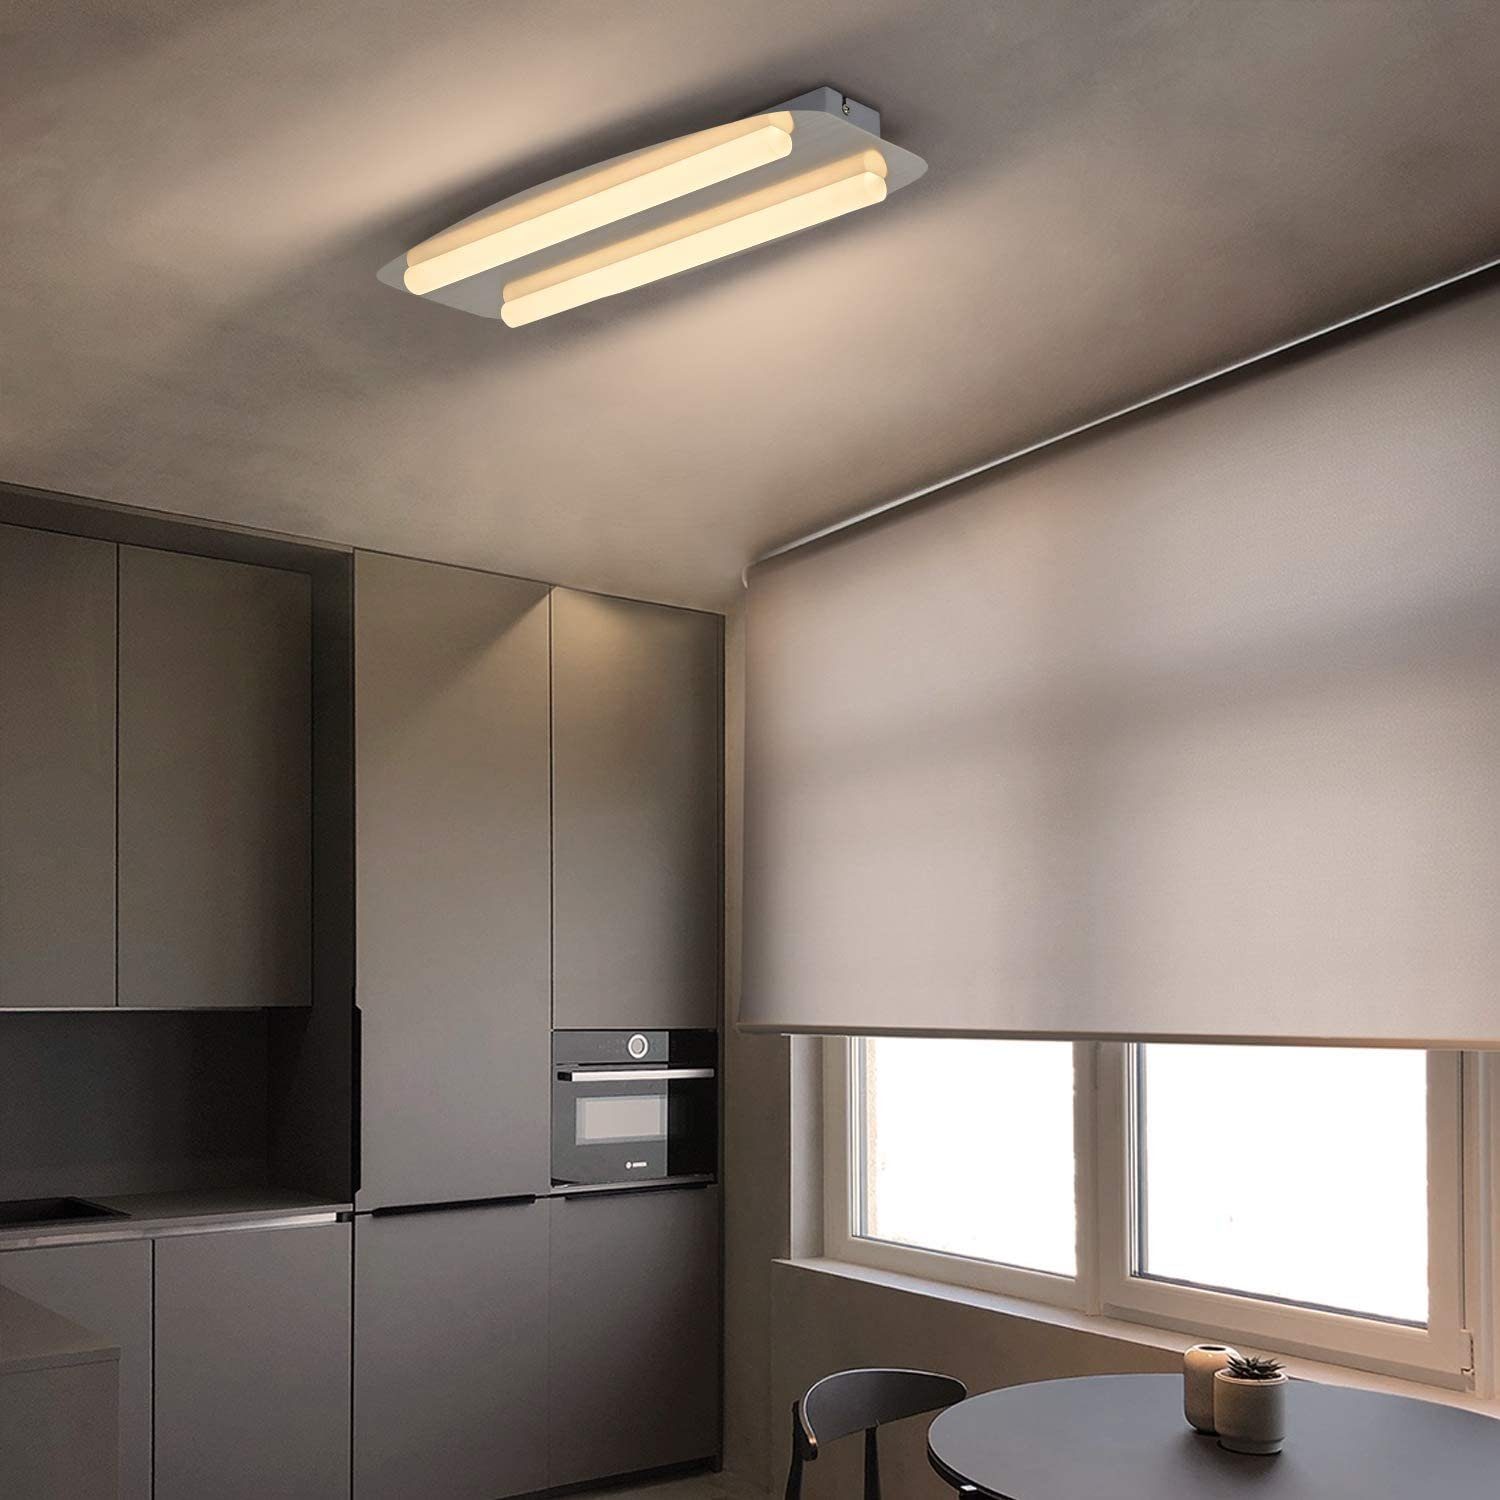 ZMH LED Kronleuchter, fest Wandleuchte Nickel integriert, Deckenleuchte Küche Warmweiß LED Innen Acryl